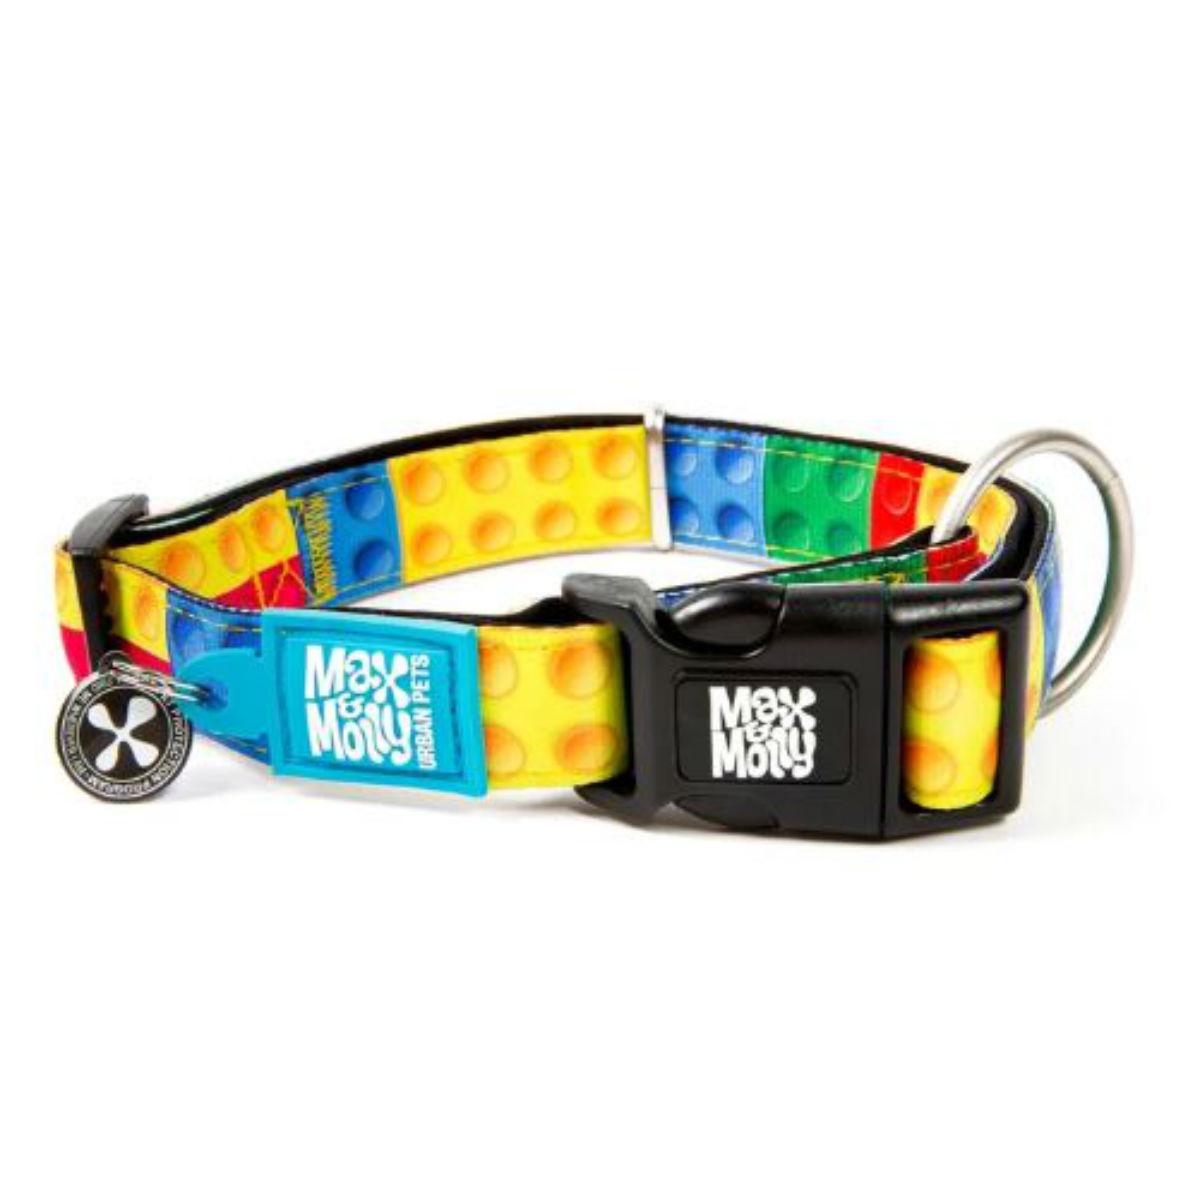 Max & Molly Smart ID Dog Collar - Playtime